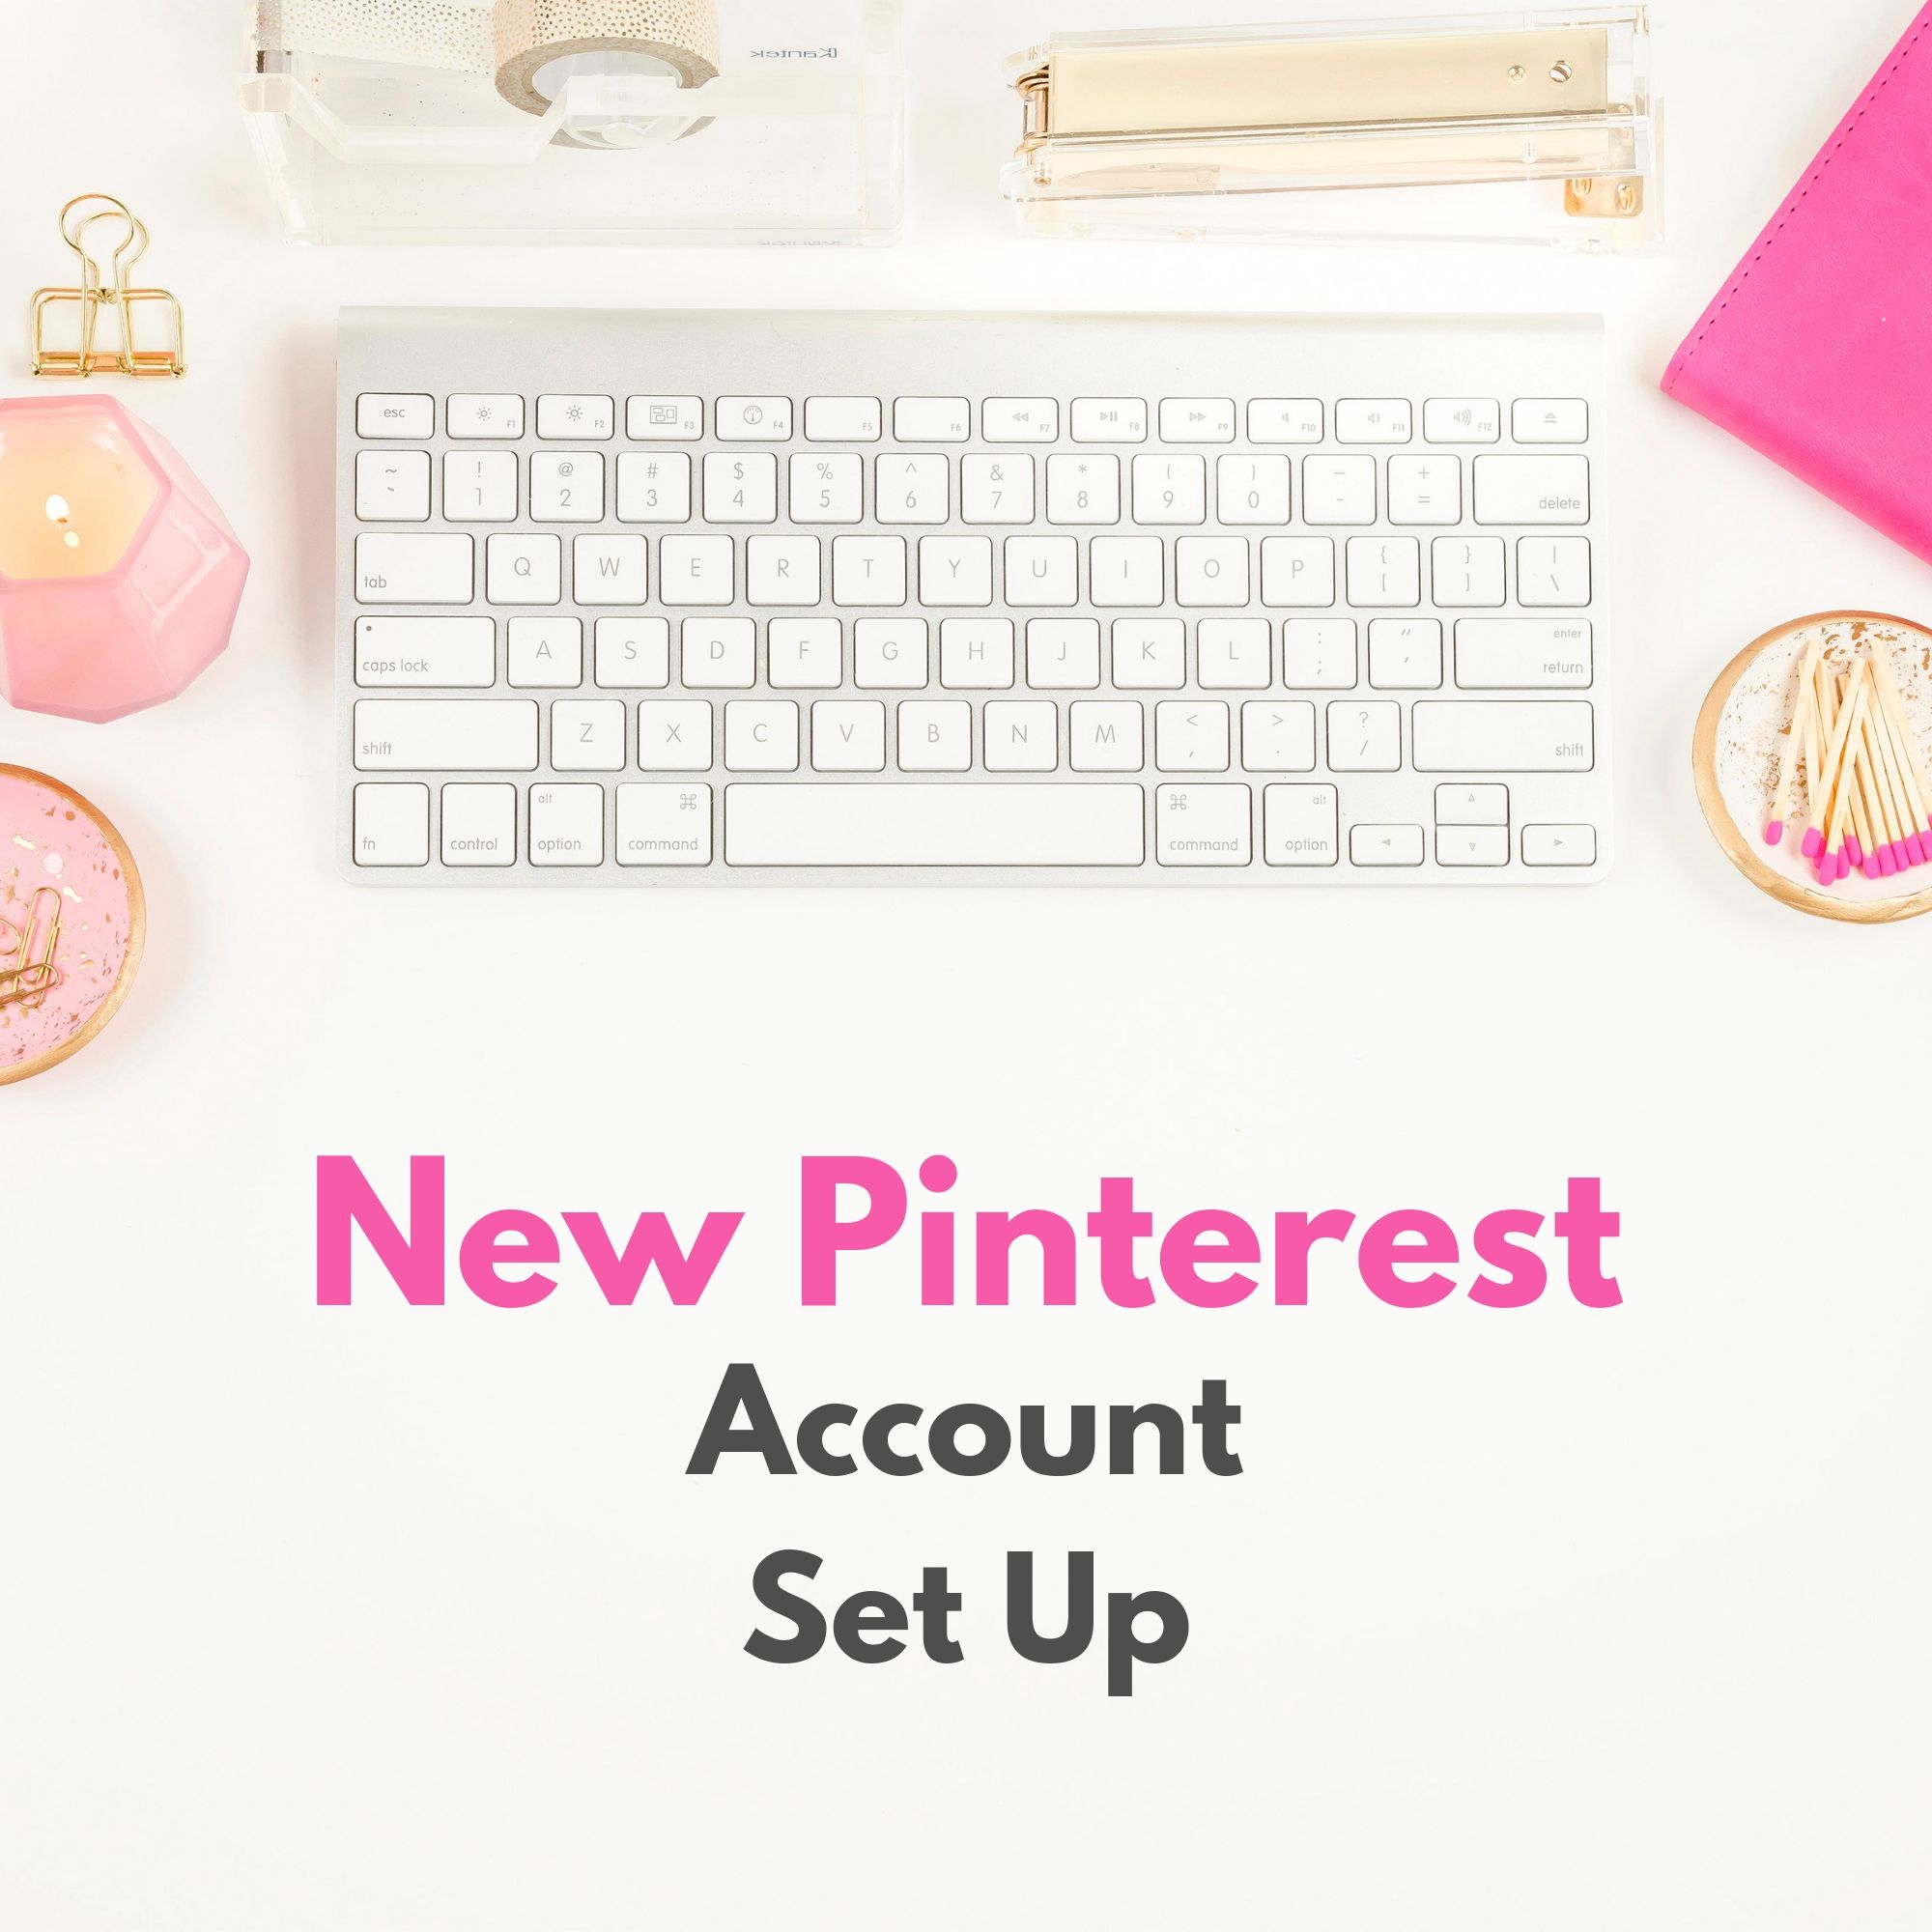 New Pinterest Account Set Up